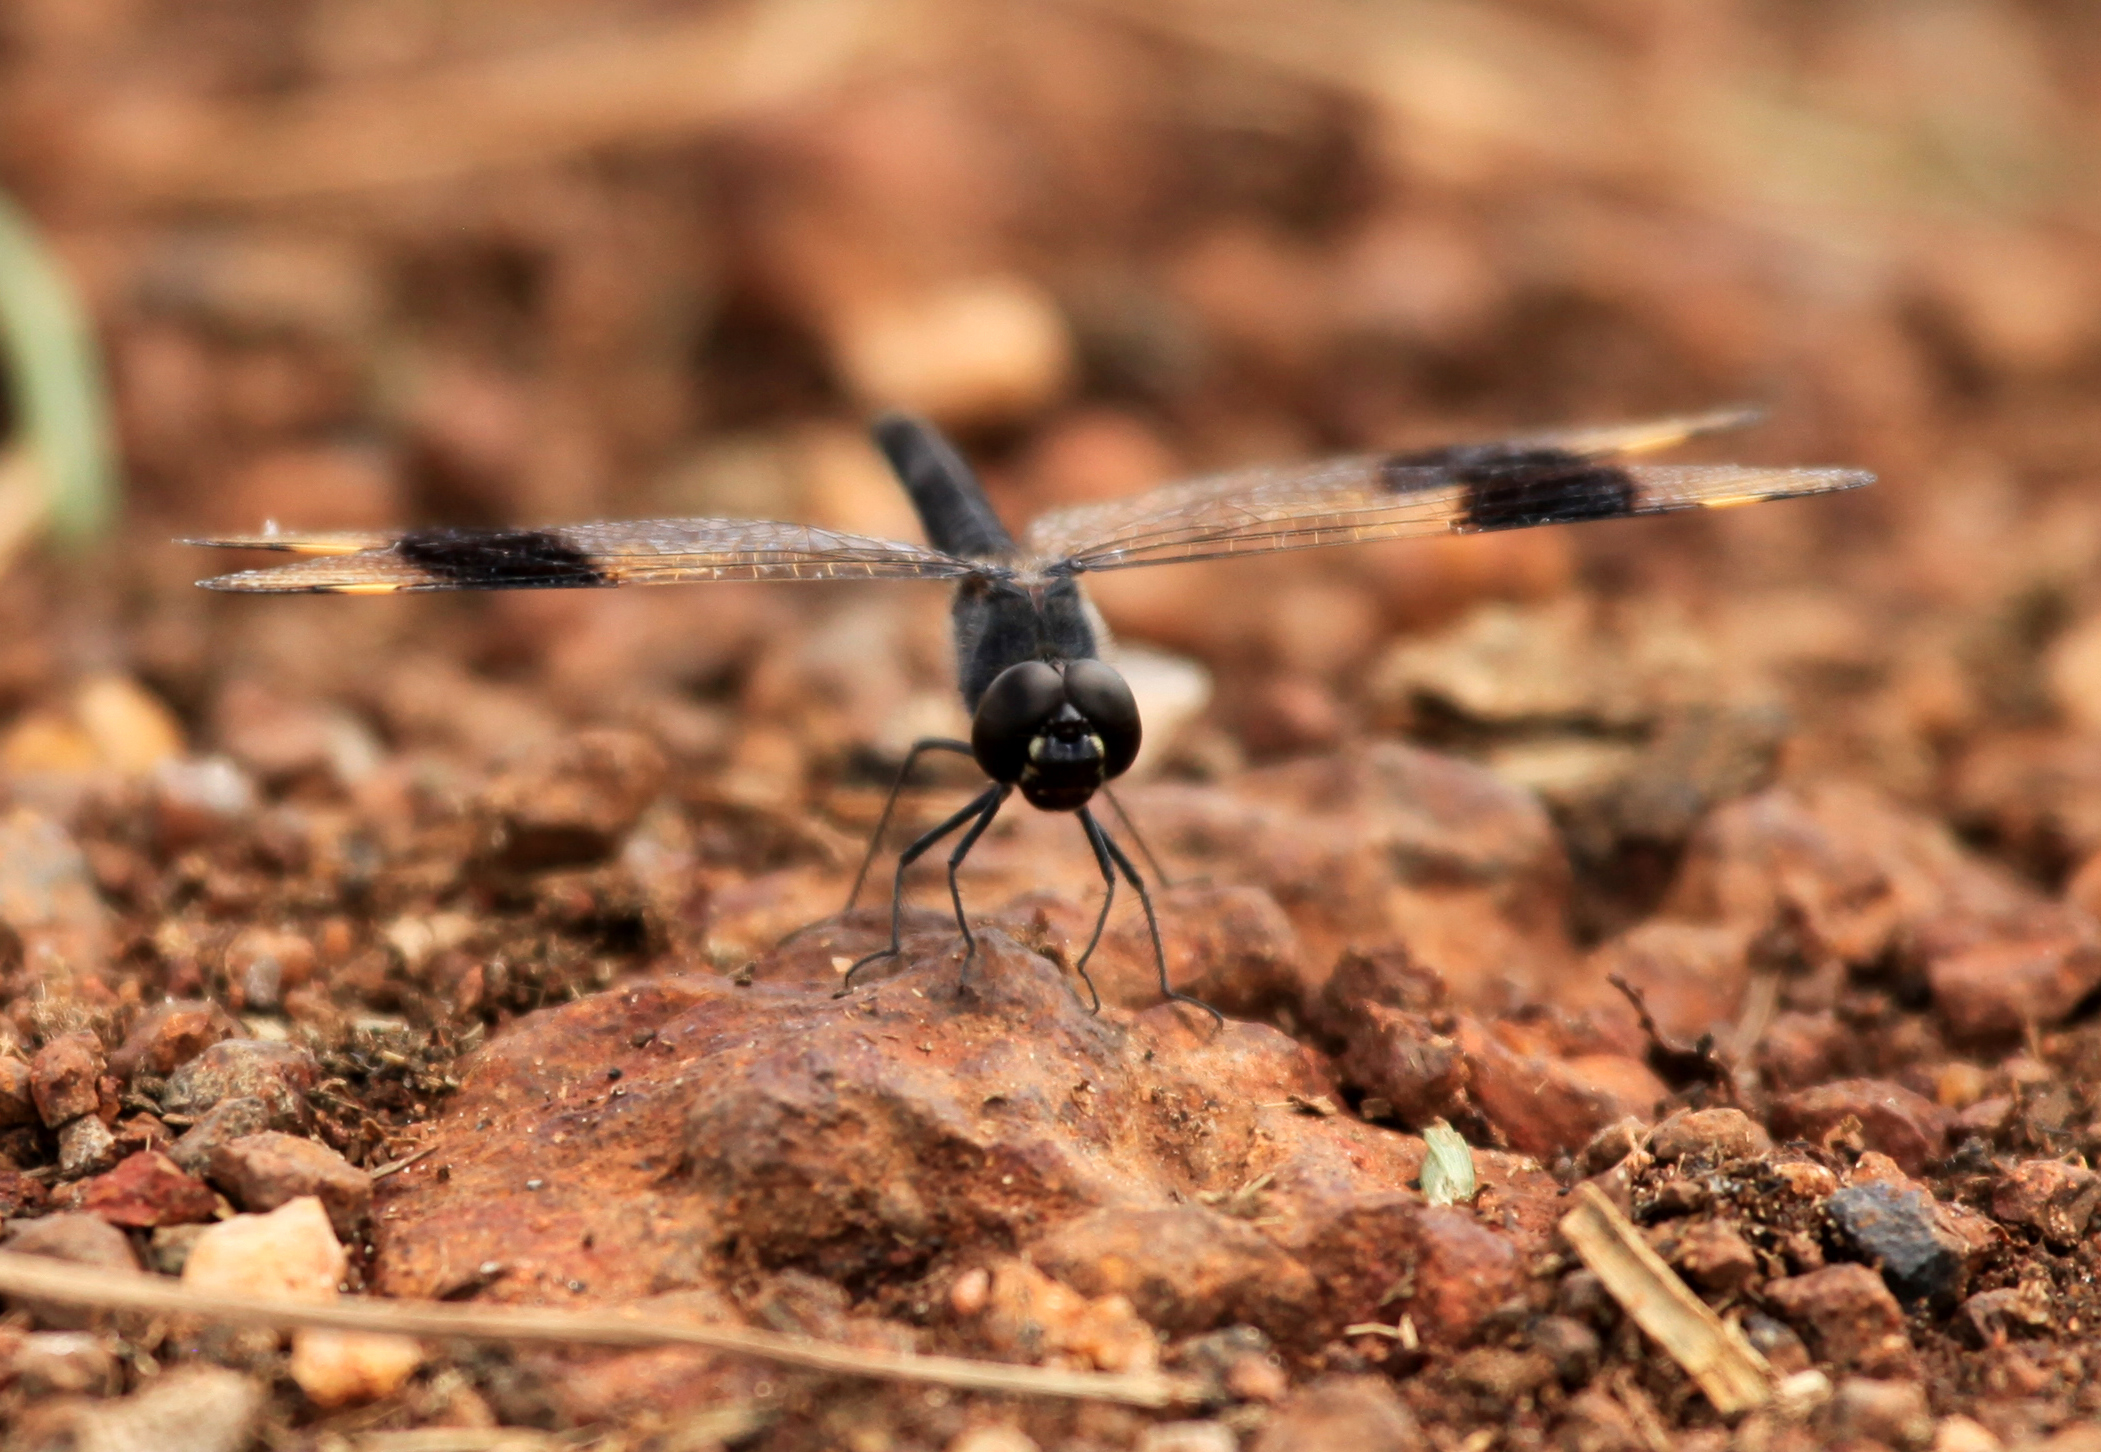 https://endangeredwild.life/wp-content/uploads/2021/06/dragonfly-bigodi-wetlands-uganda-africa-WDH7PQL.jpg